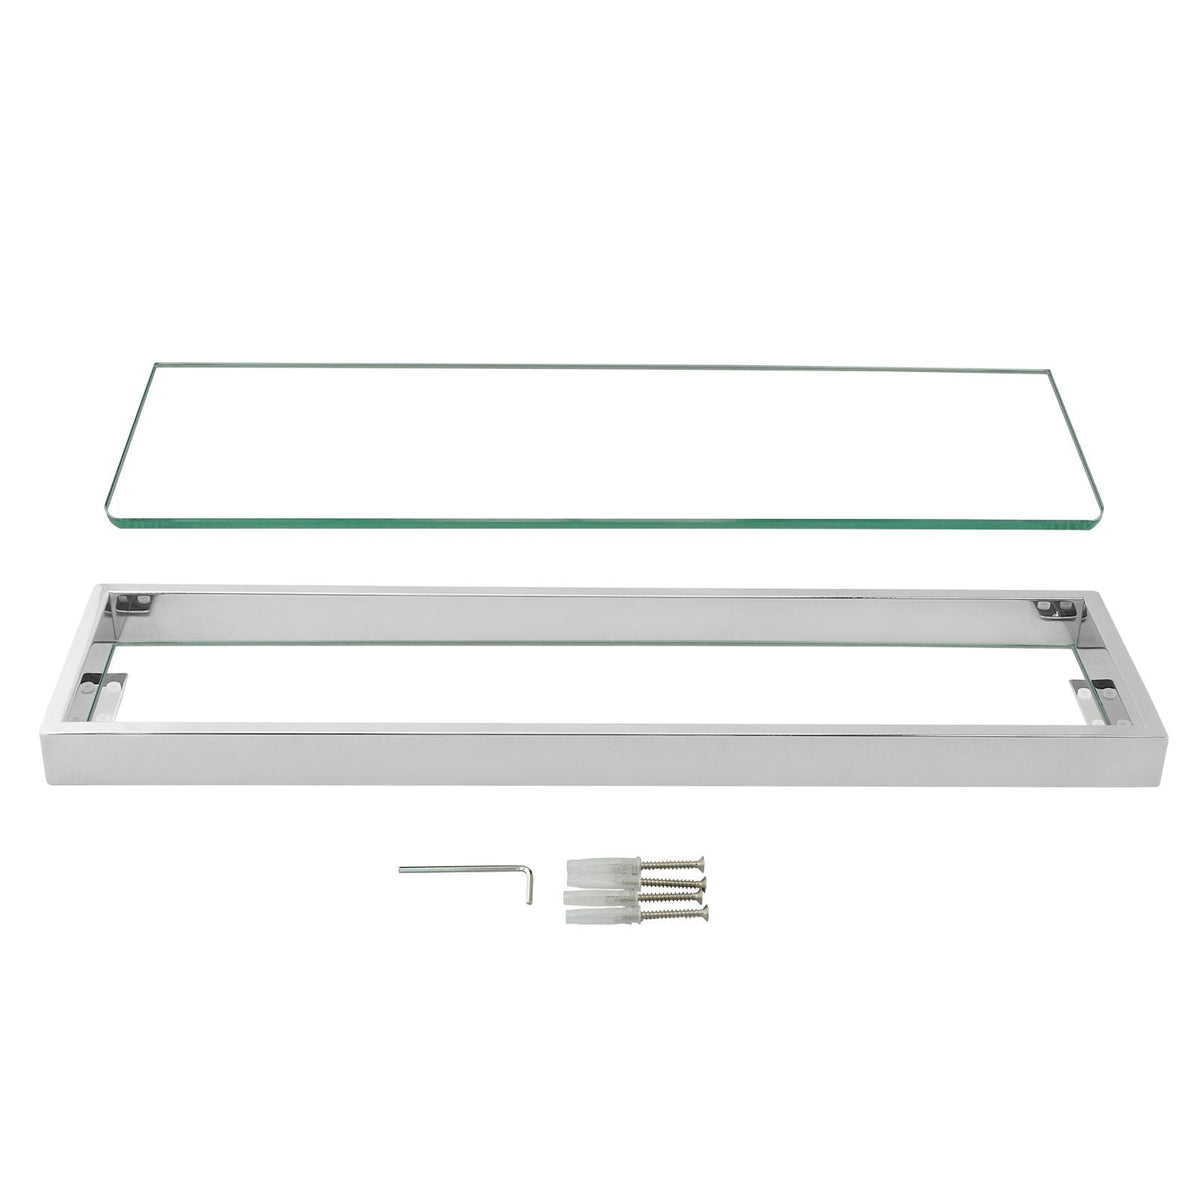 IVANO Series Chrome Glass Shelf 600mm